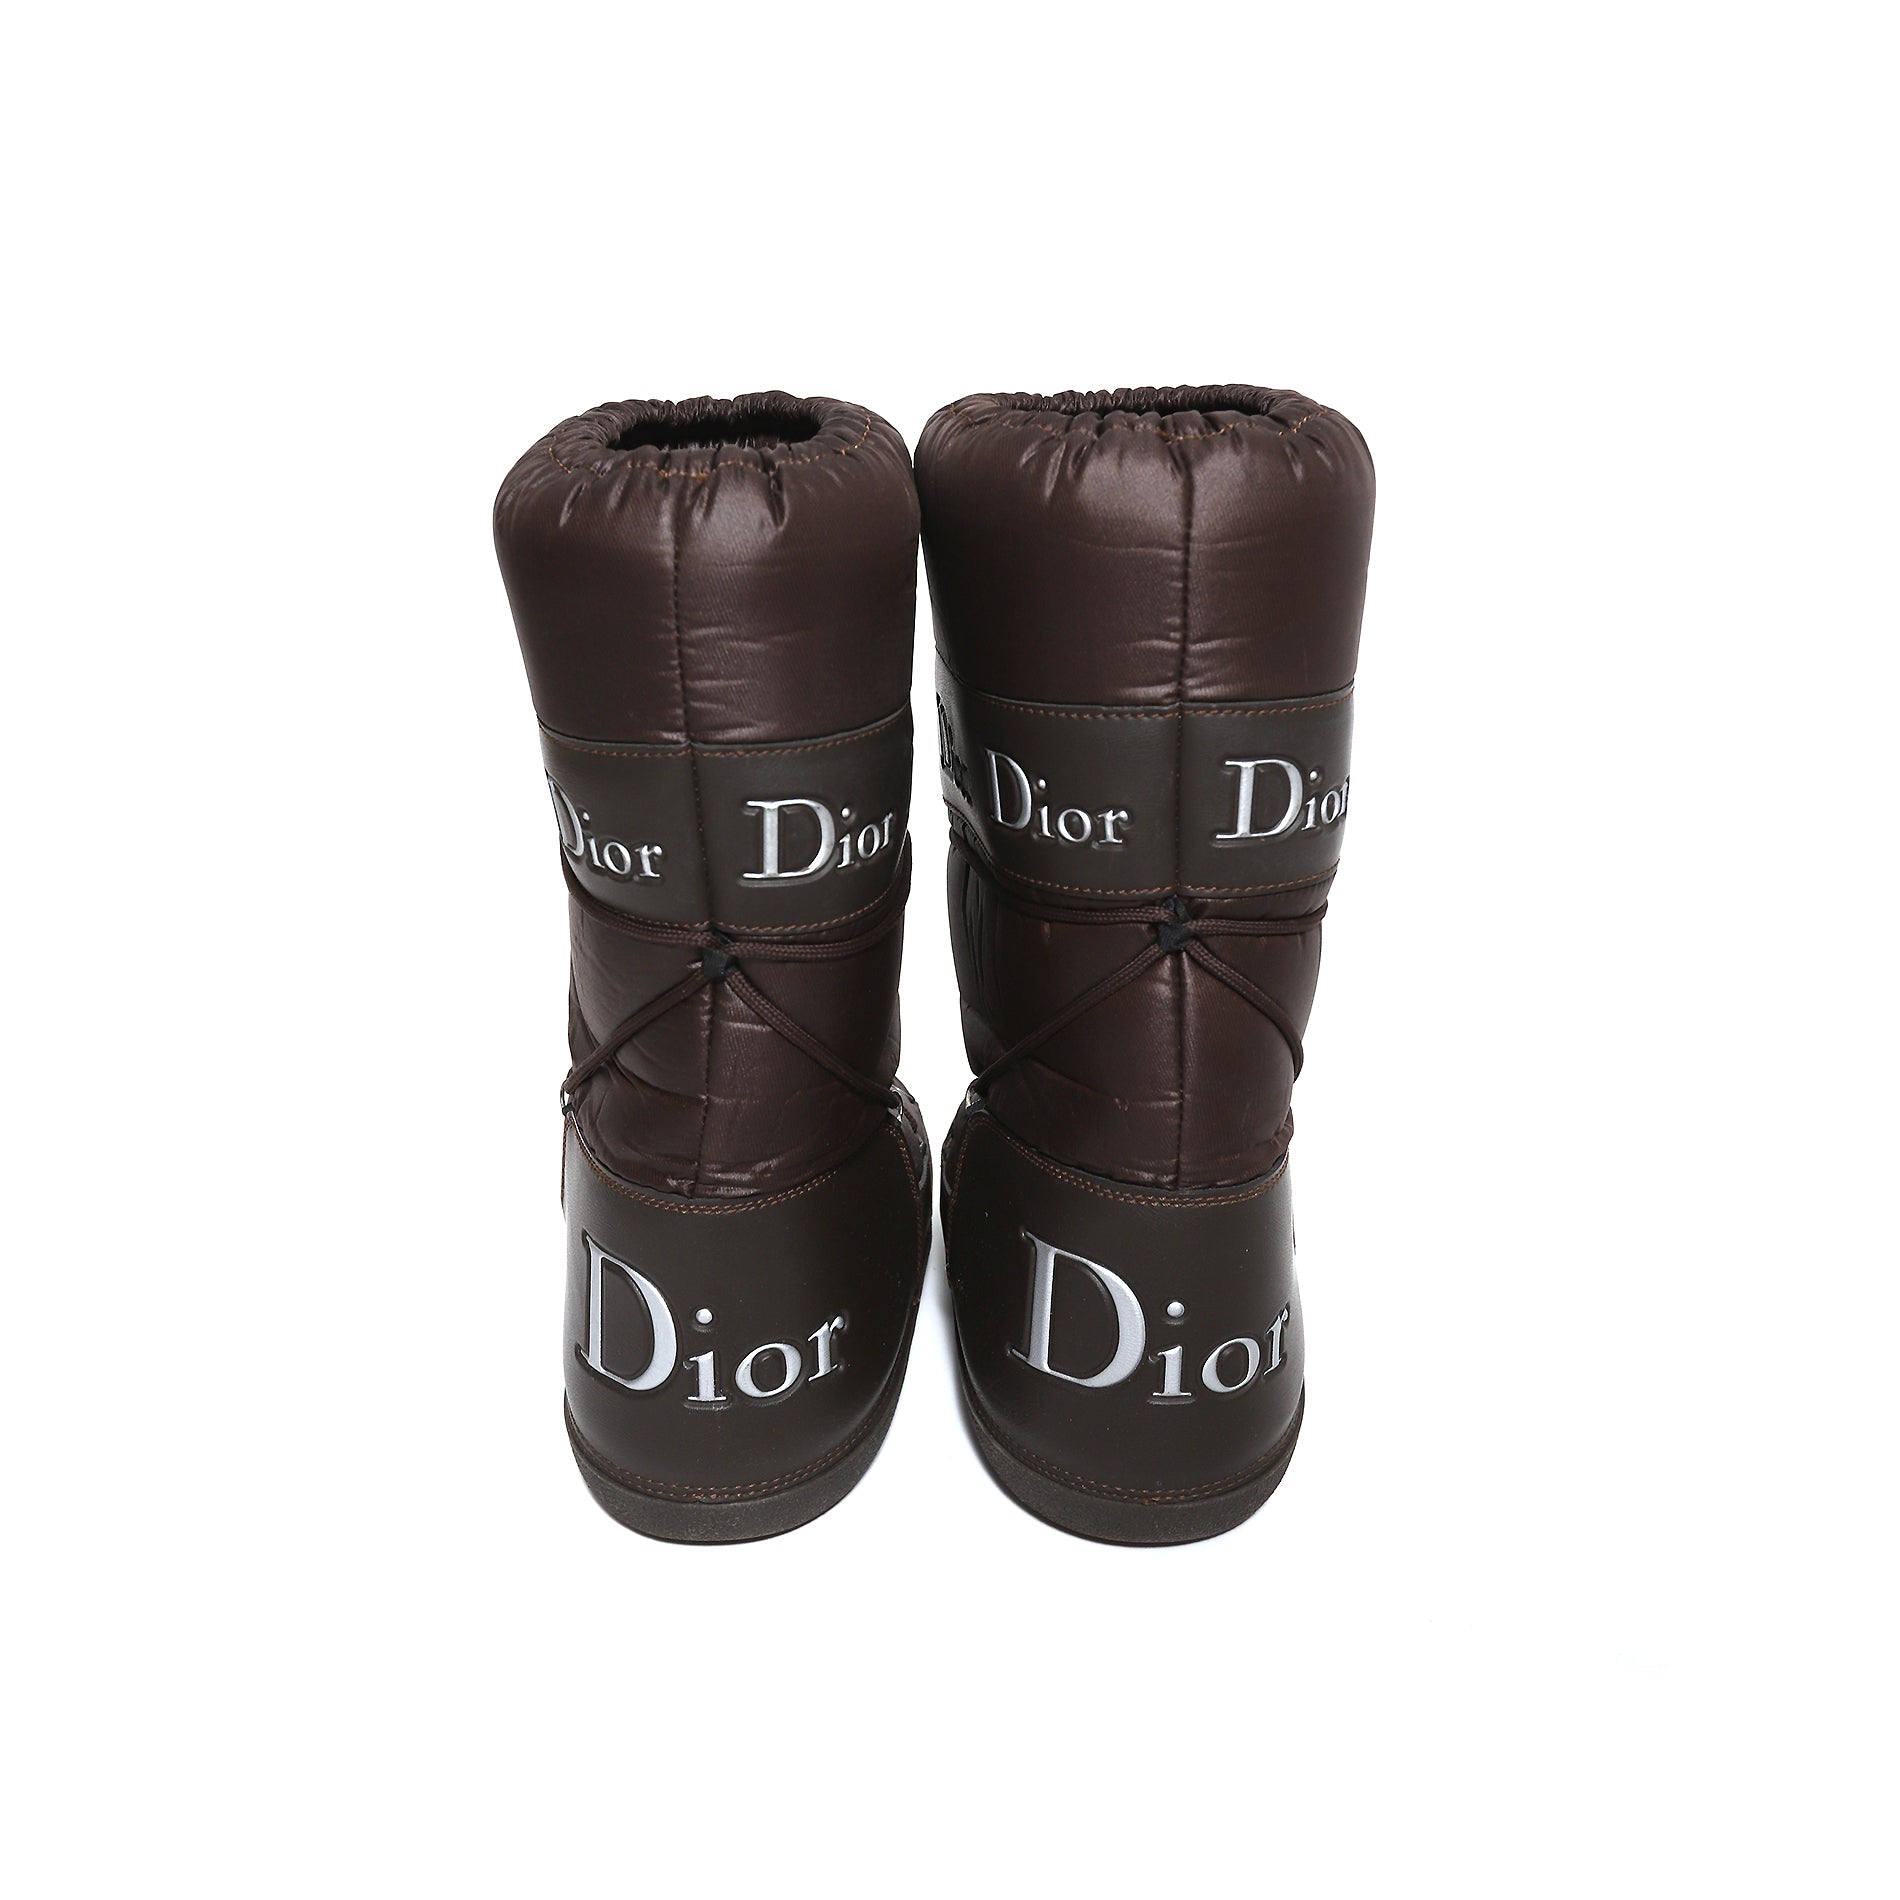 Christian Dior by John Galliano 2000s Black Moon Boots - Ākaibu Store